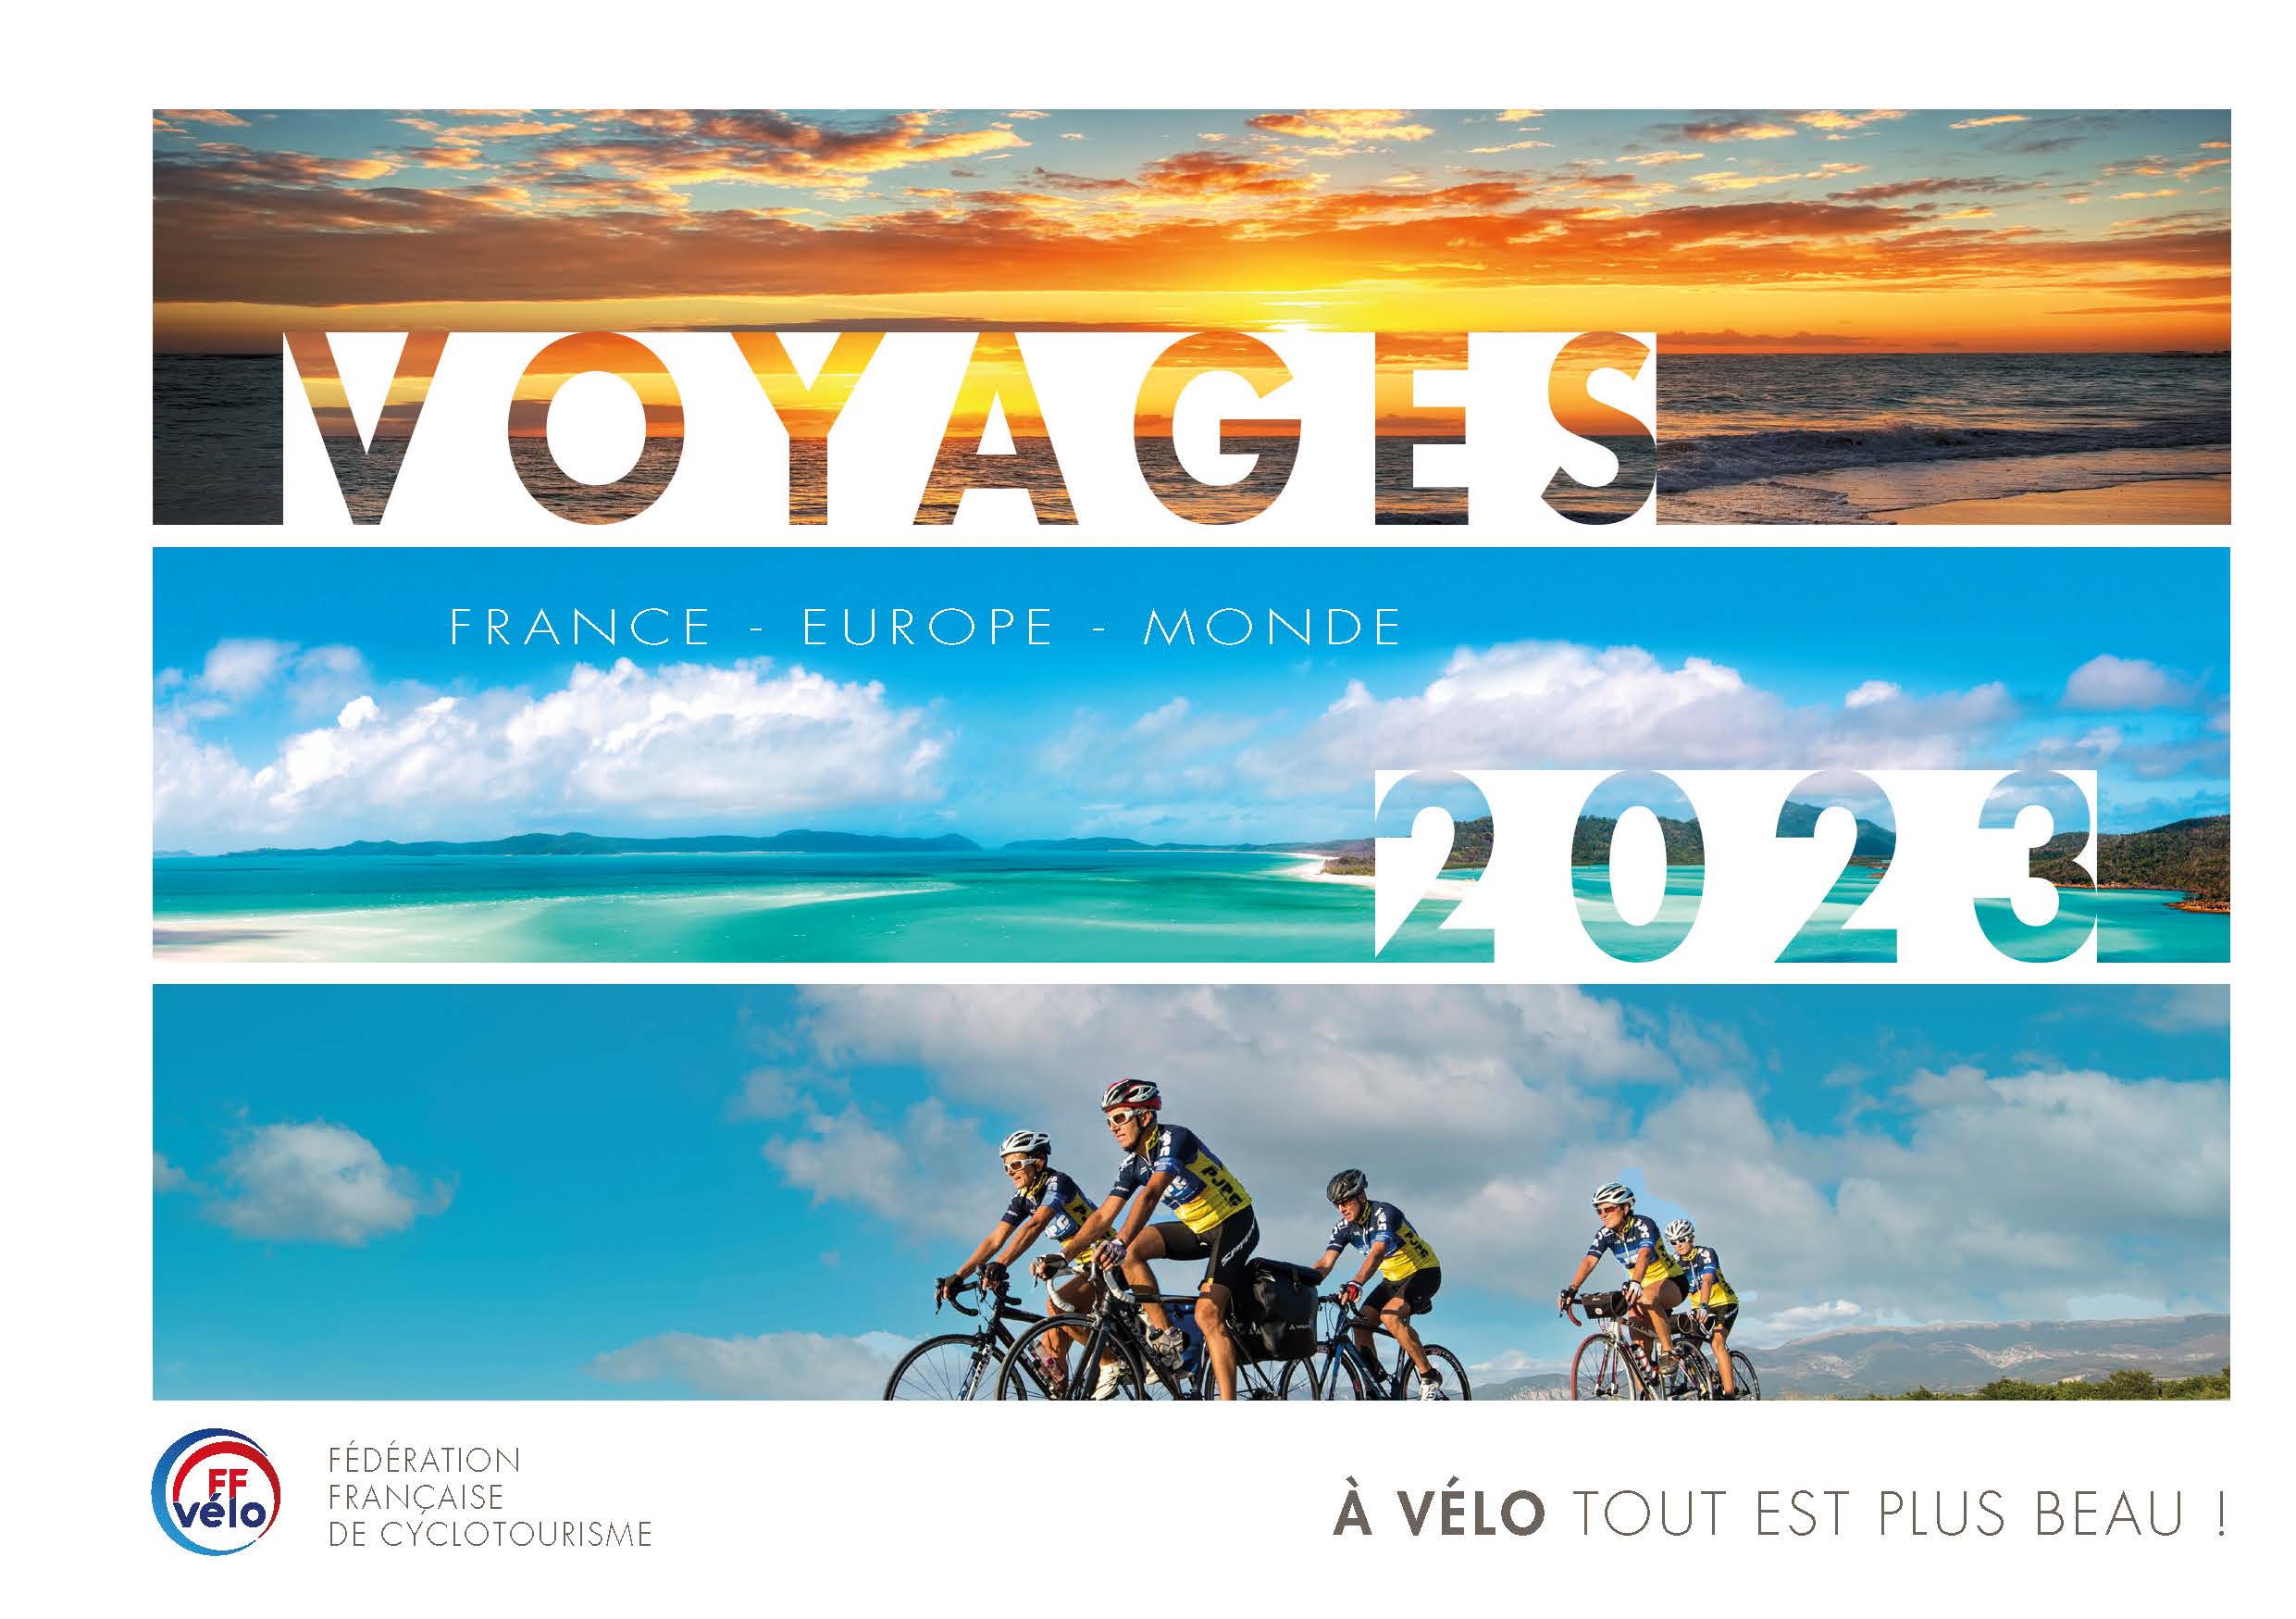 catalogue voyages touyarot 2023